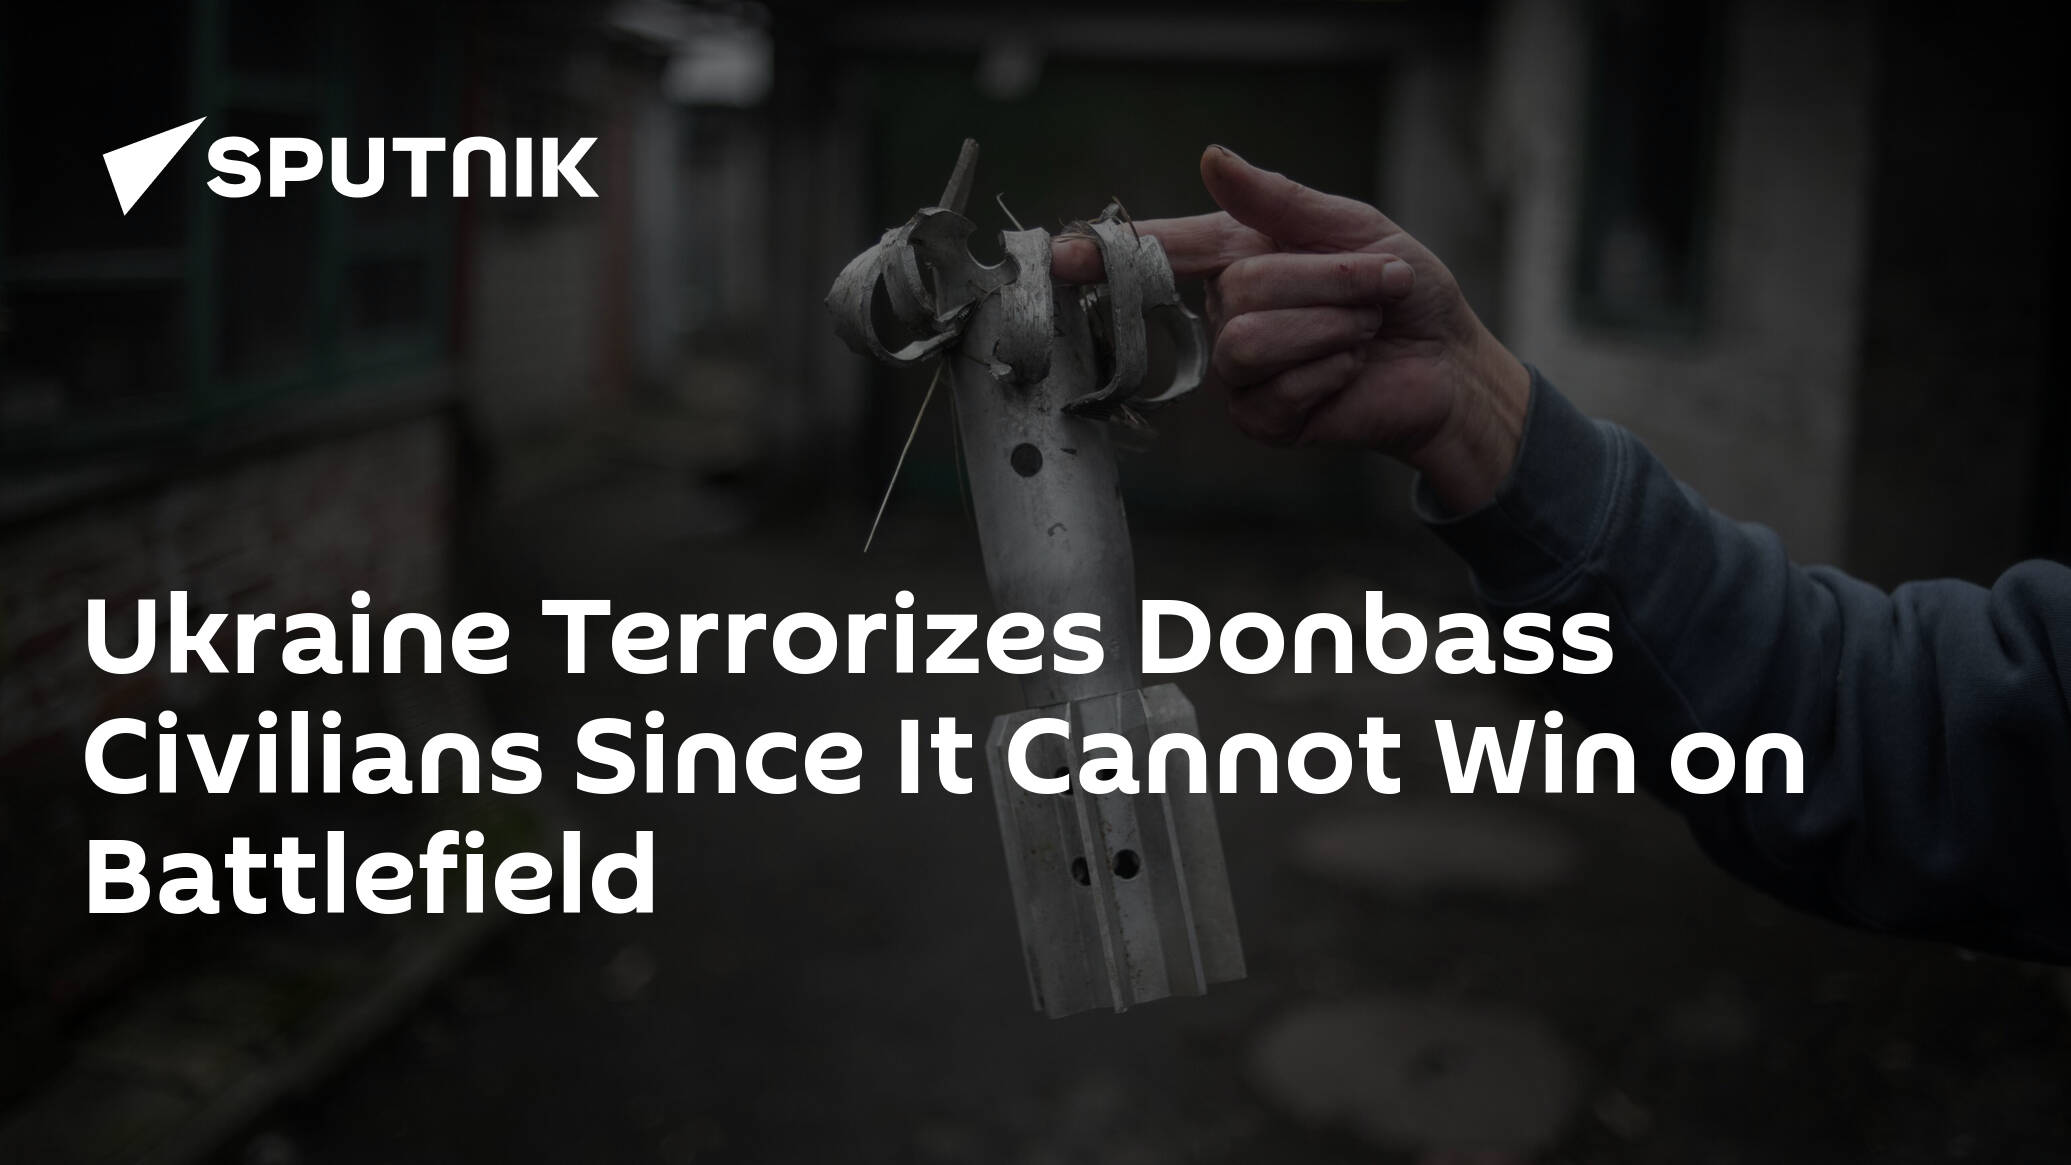 Ukraine Terrorizes Donbass Civilians Since It Cannot Win on Battlefield